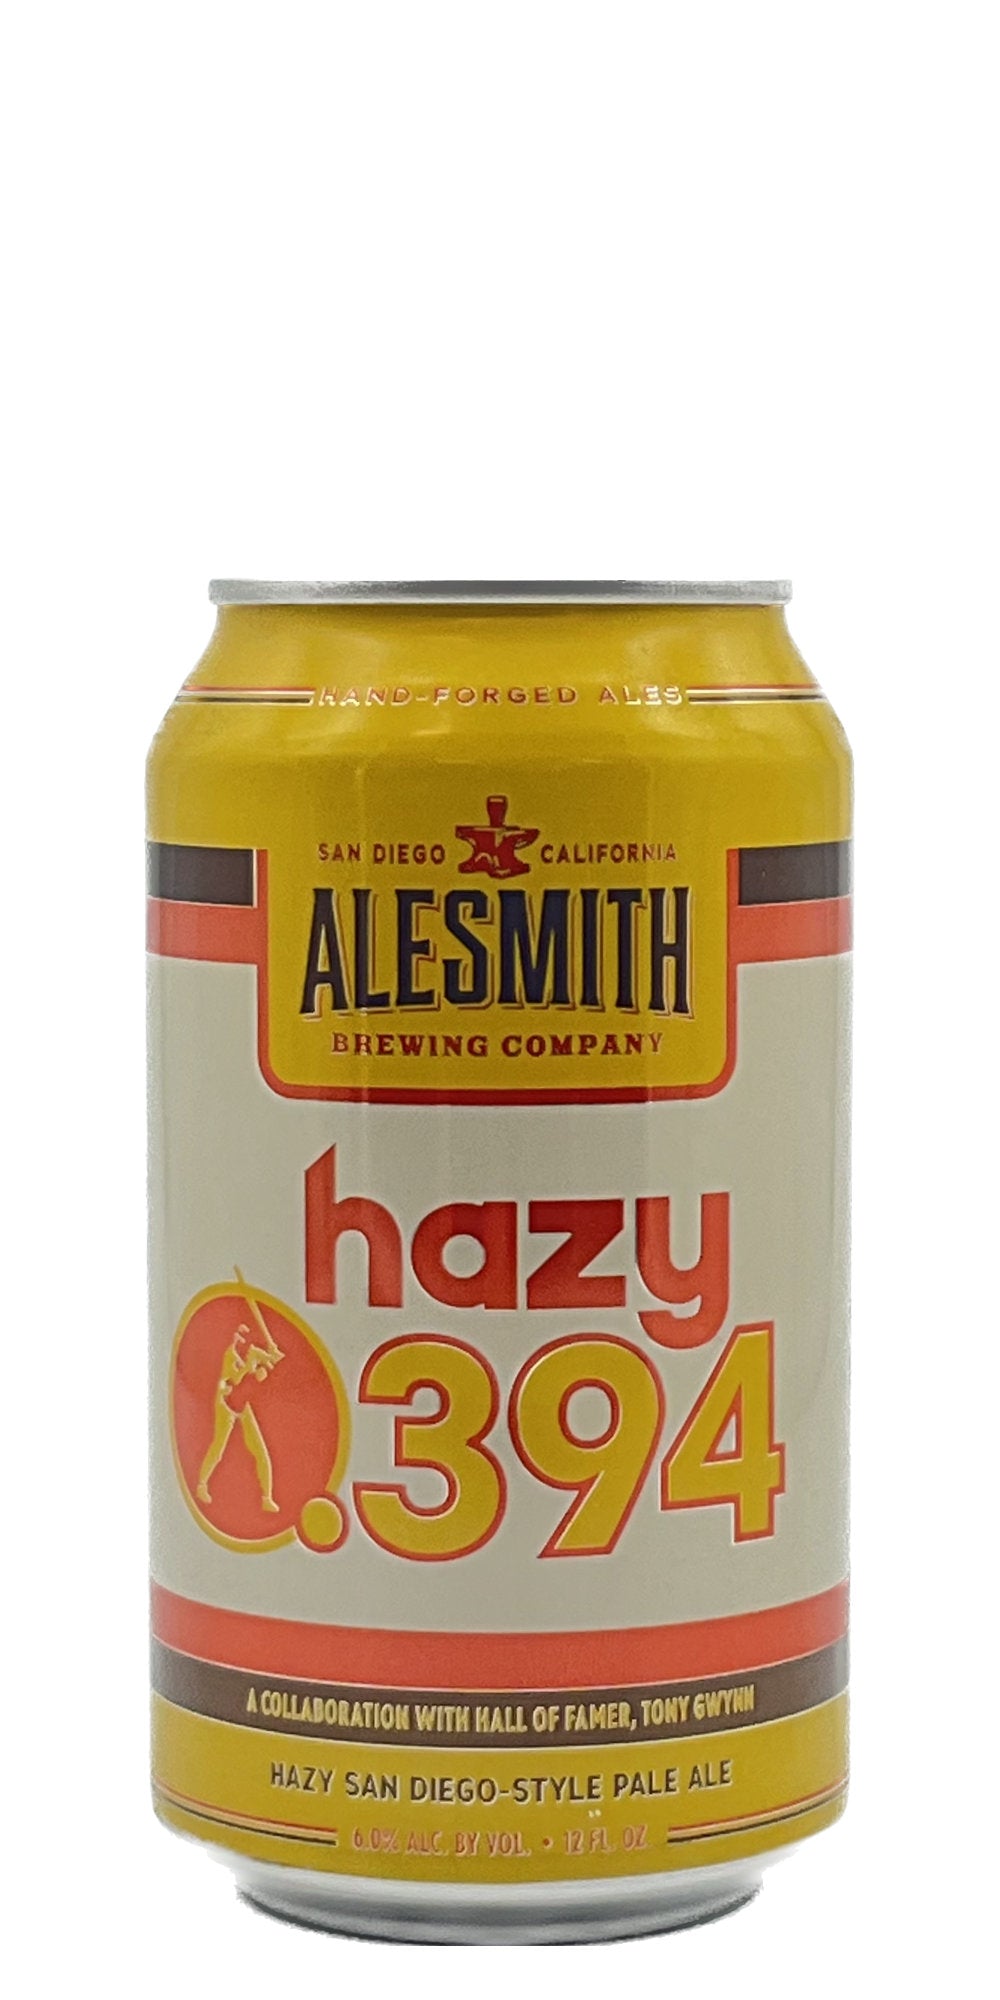 Alesmith - Hazy .394